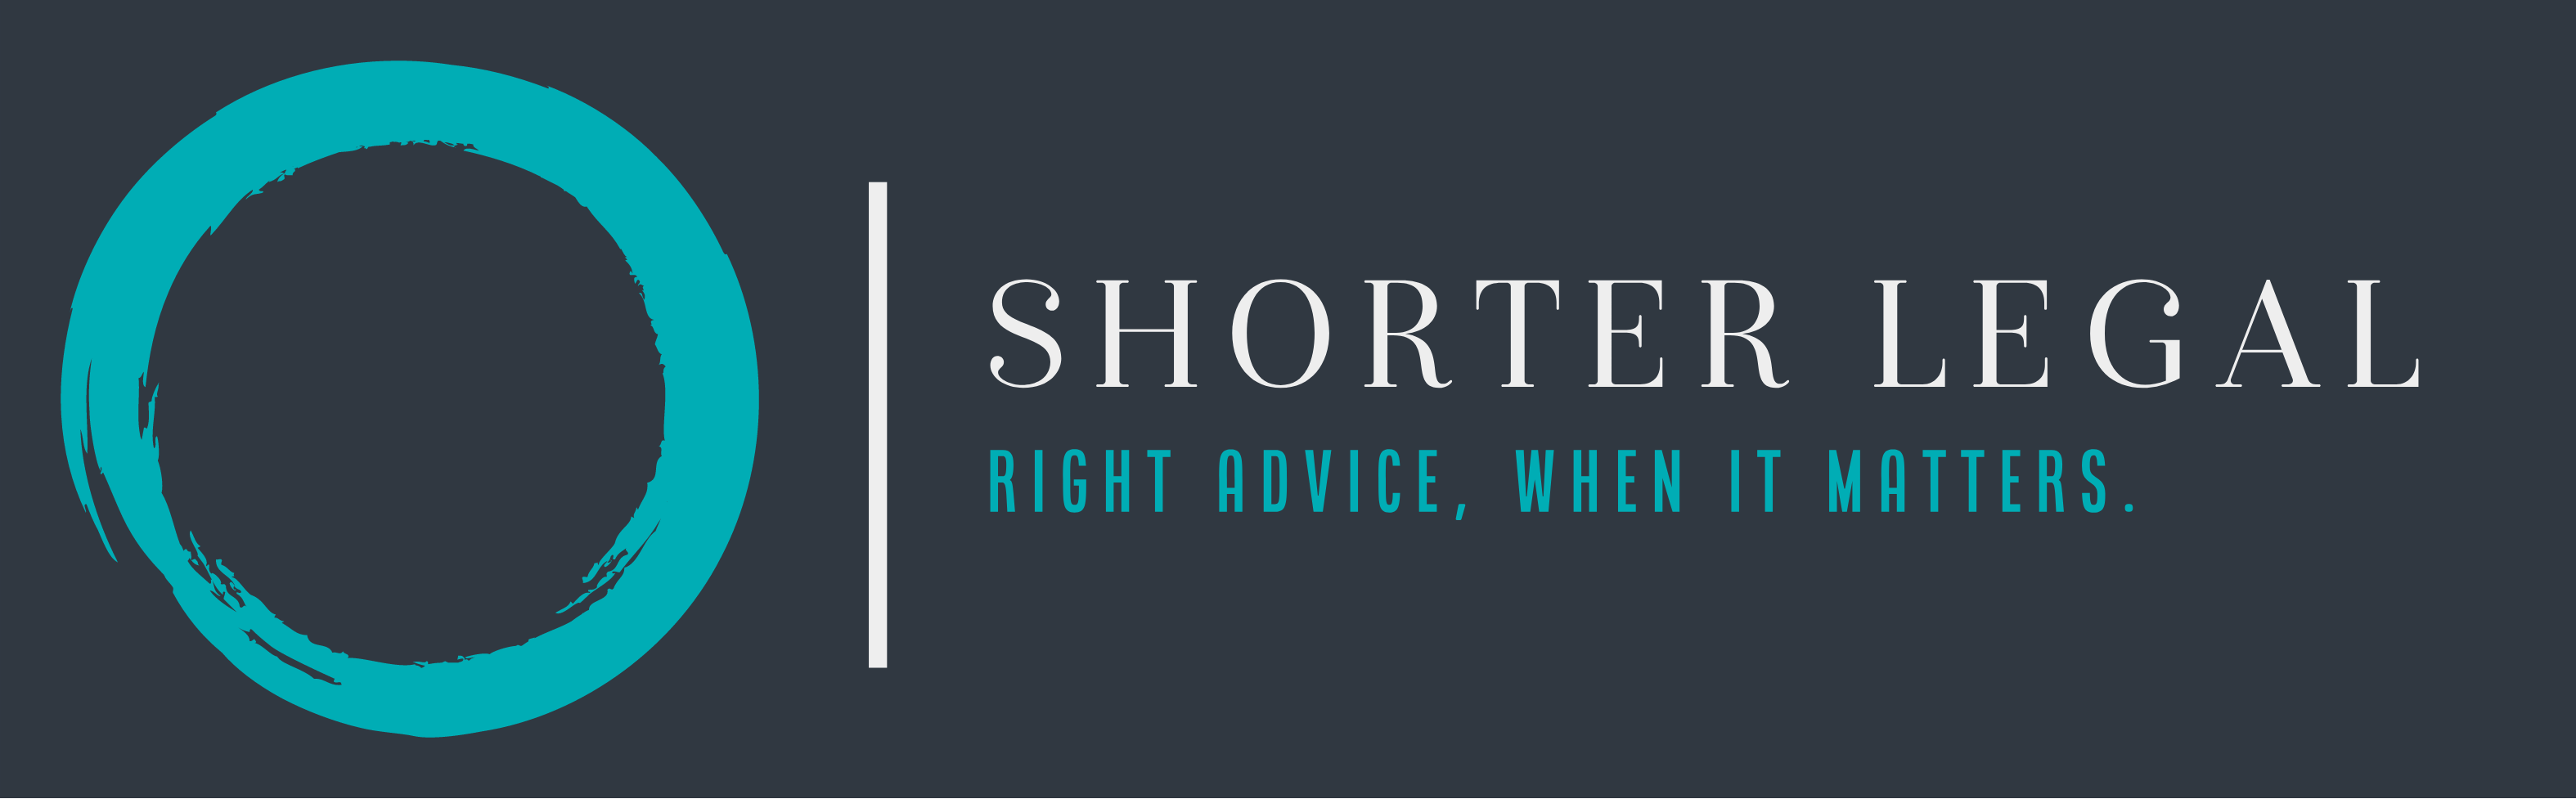 Home - Shorter Legal